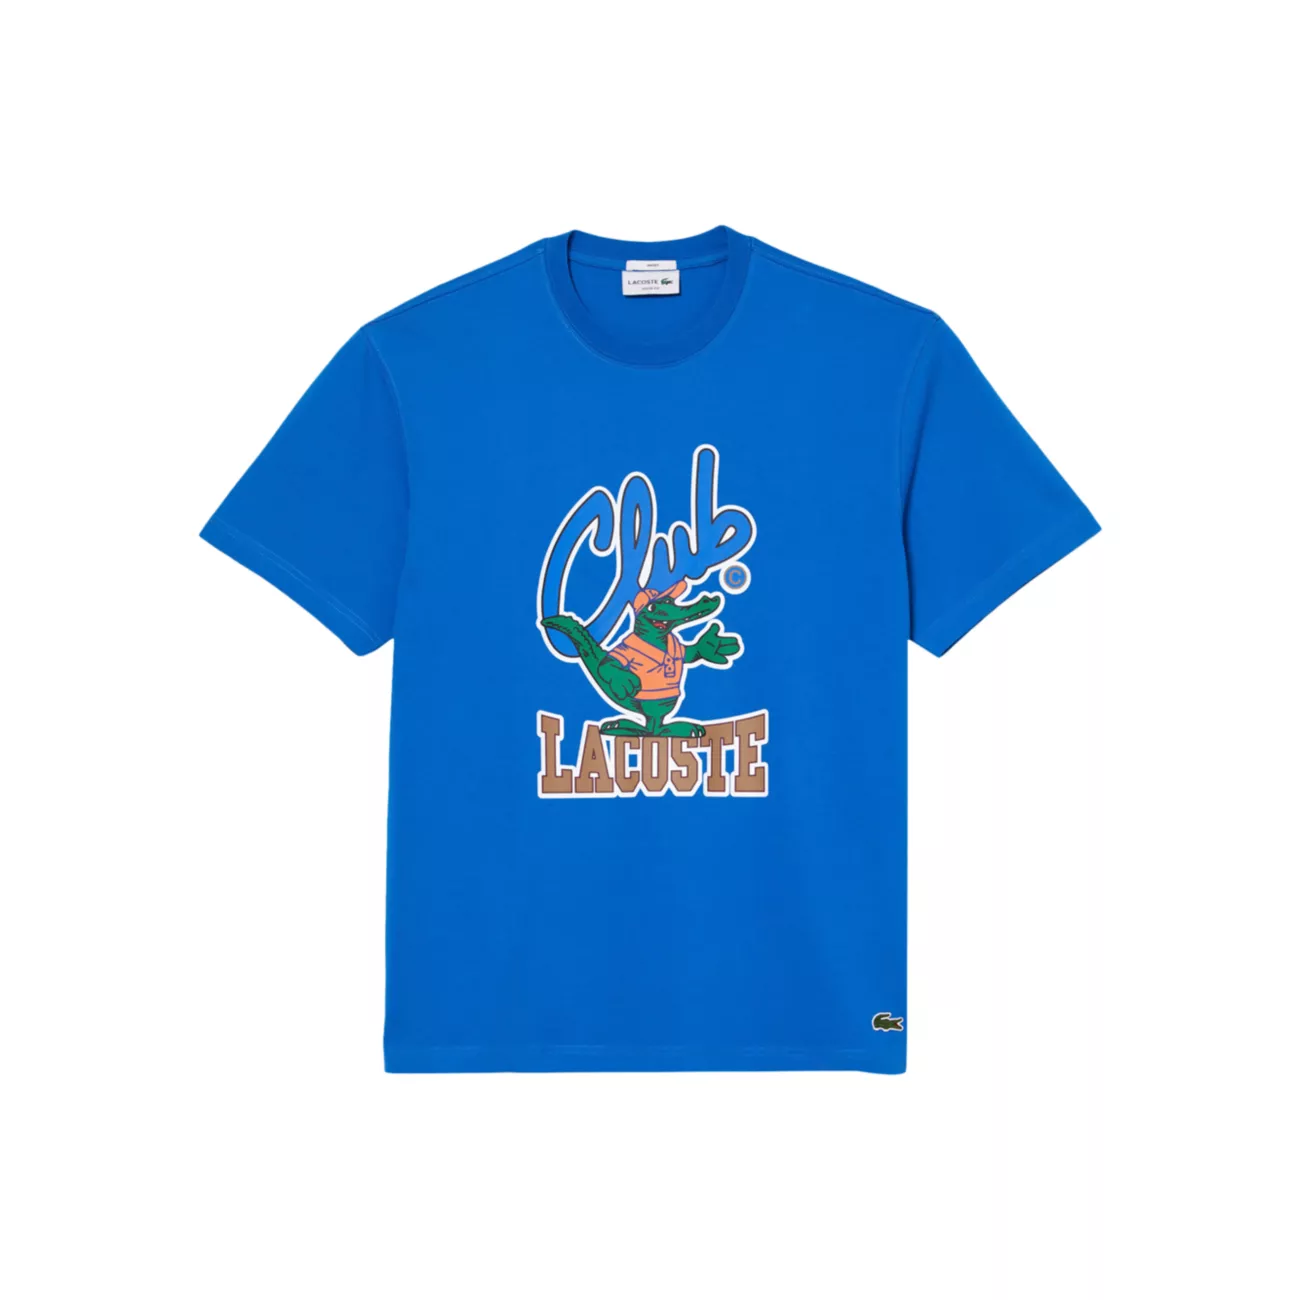 Мужская хлопковая футболка Club Lacoste Graphic от Lacoste Lacoste